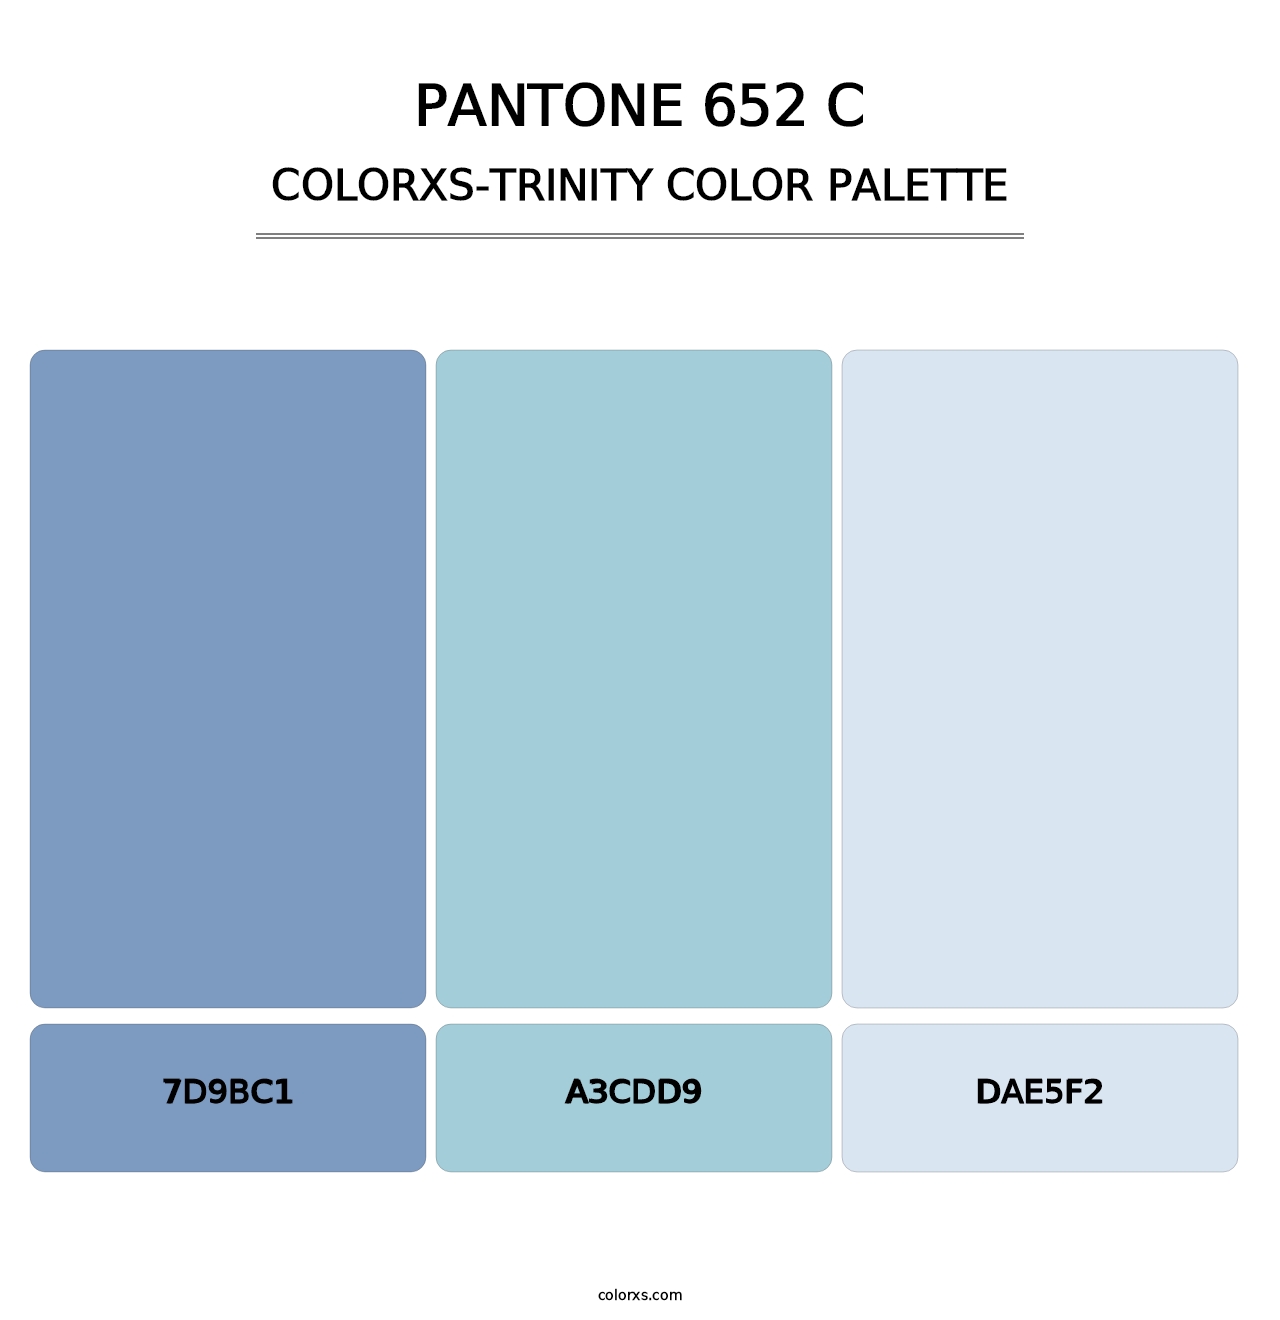 PANTONE 652 C - Colorxs Trinity Palette